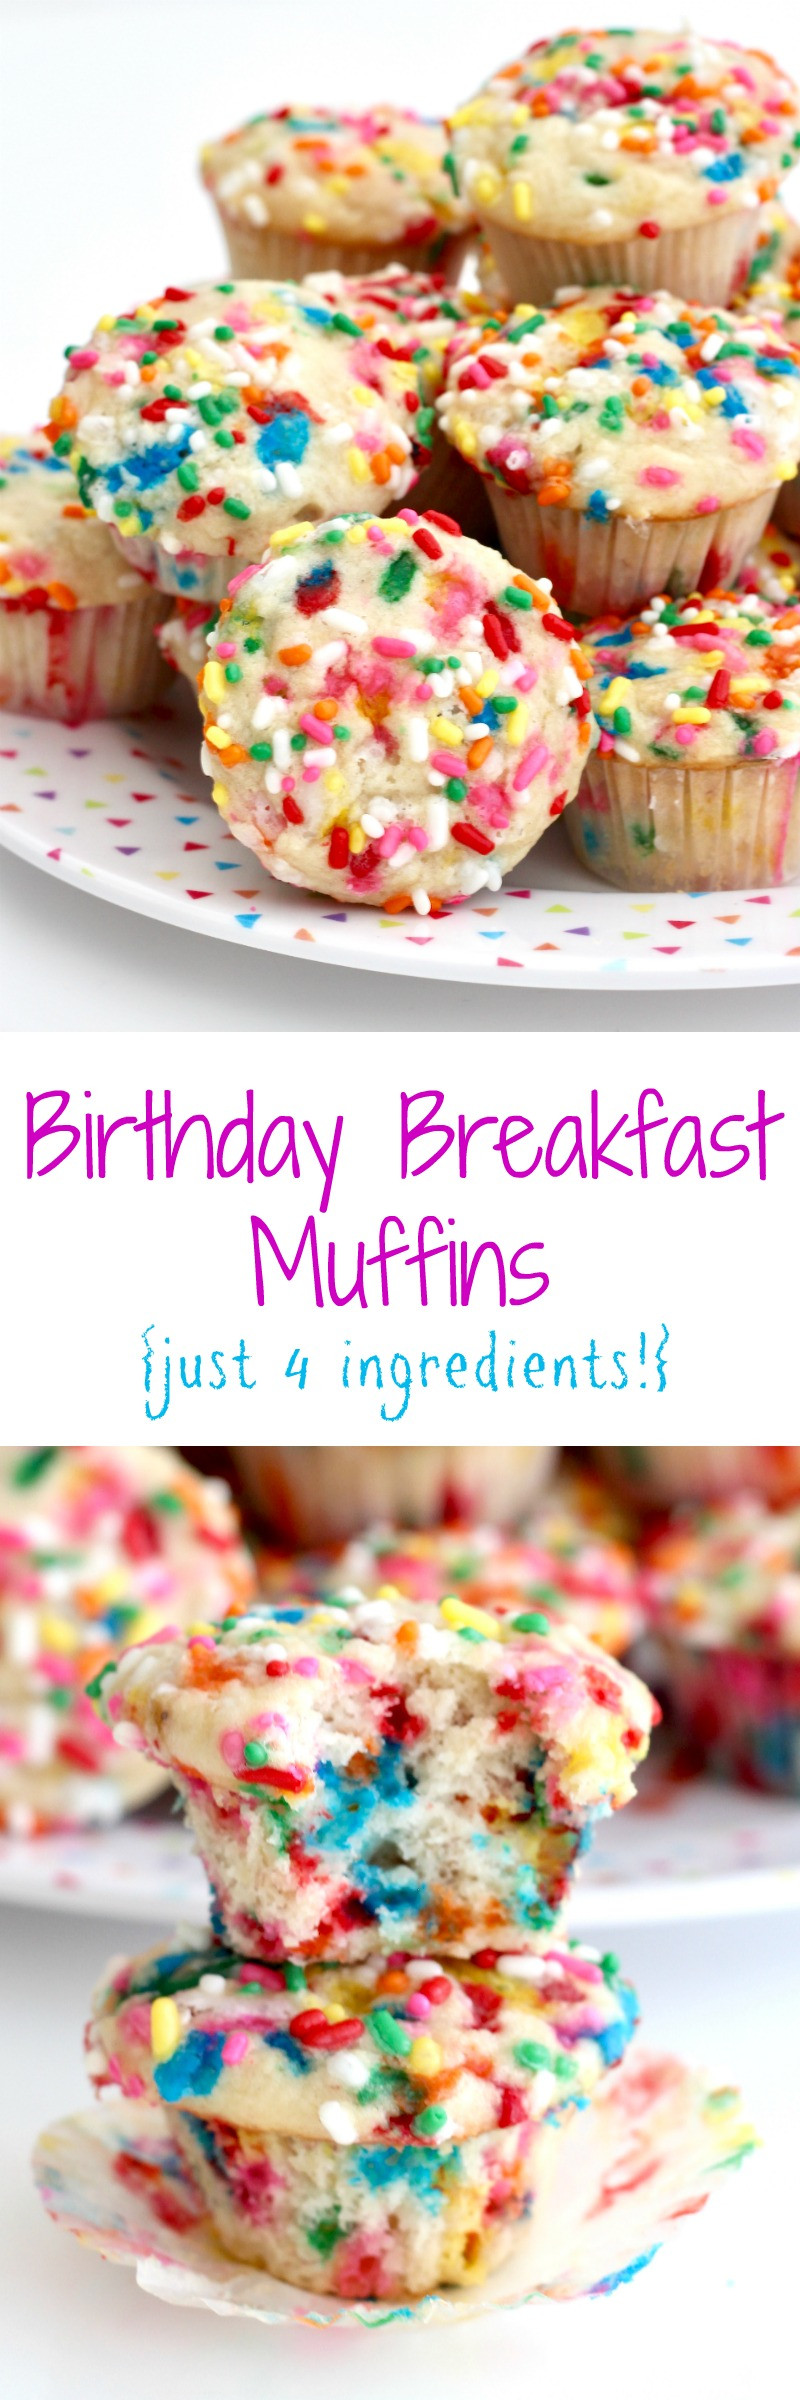 Birthday Breakfast Recipes
 Birthday Breakfast Muffins